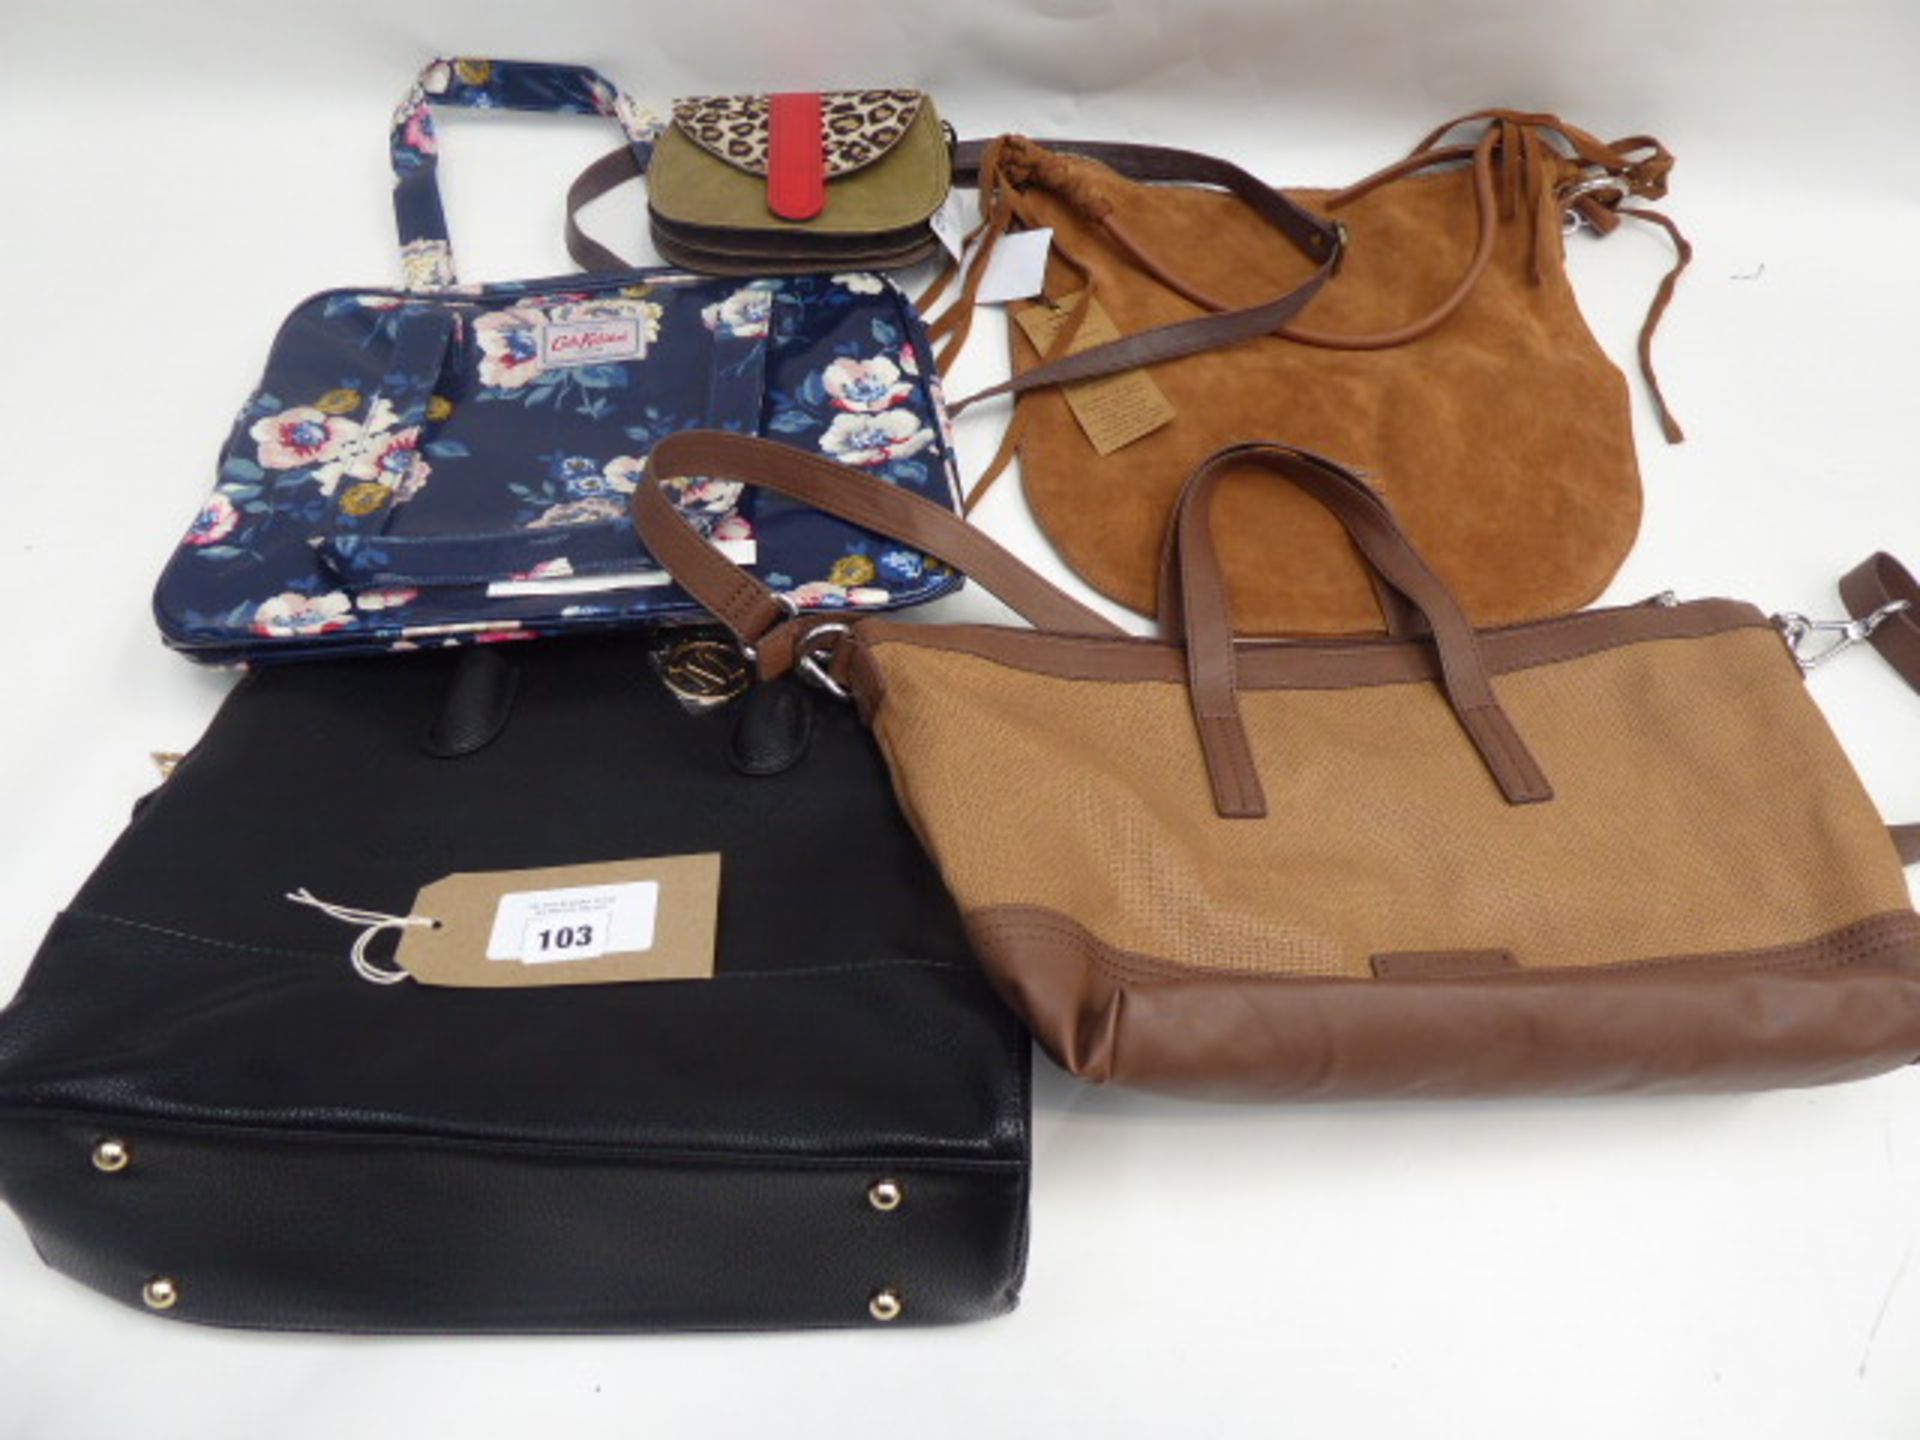 5 bags:a Cath Kidston floral bag, a suede 5th Avenue handbag, a Soruka handmade bag, a Miss Lulu